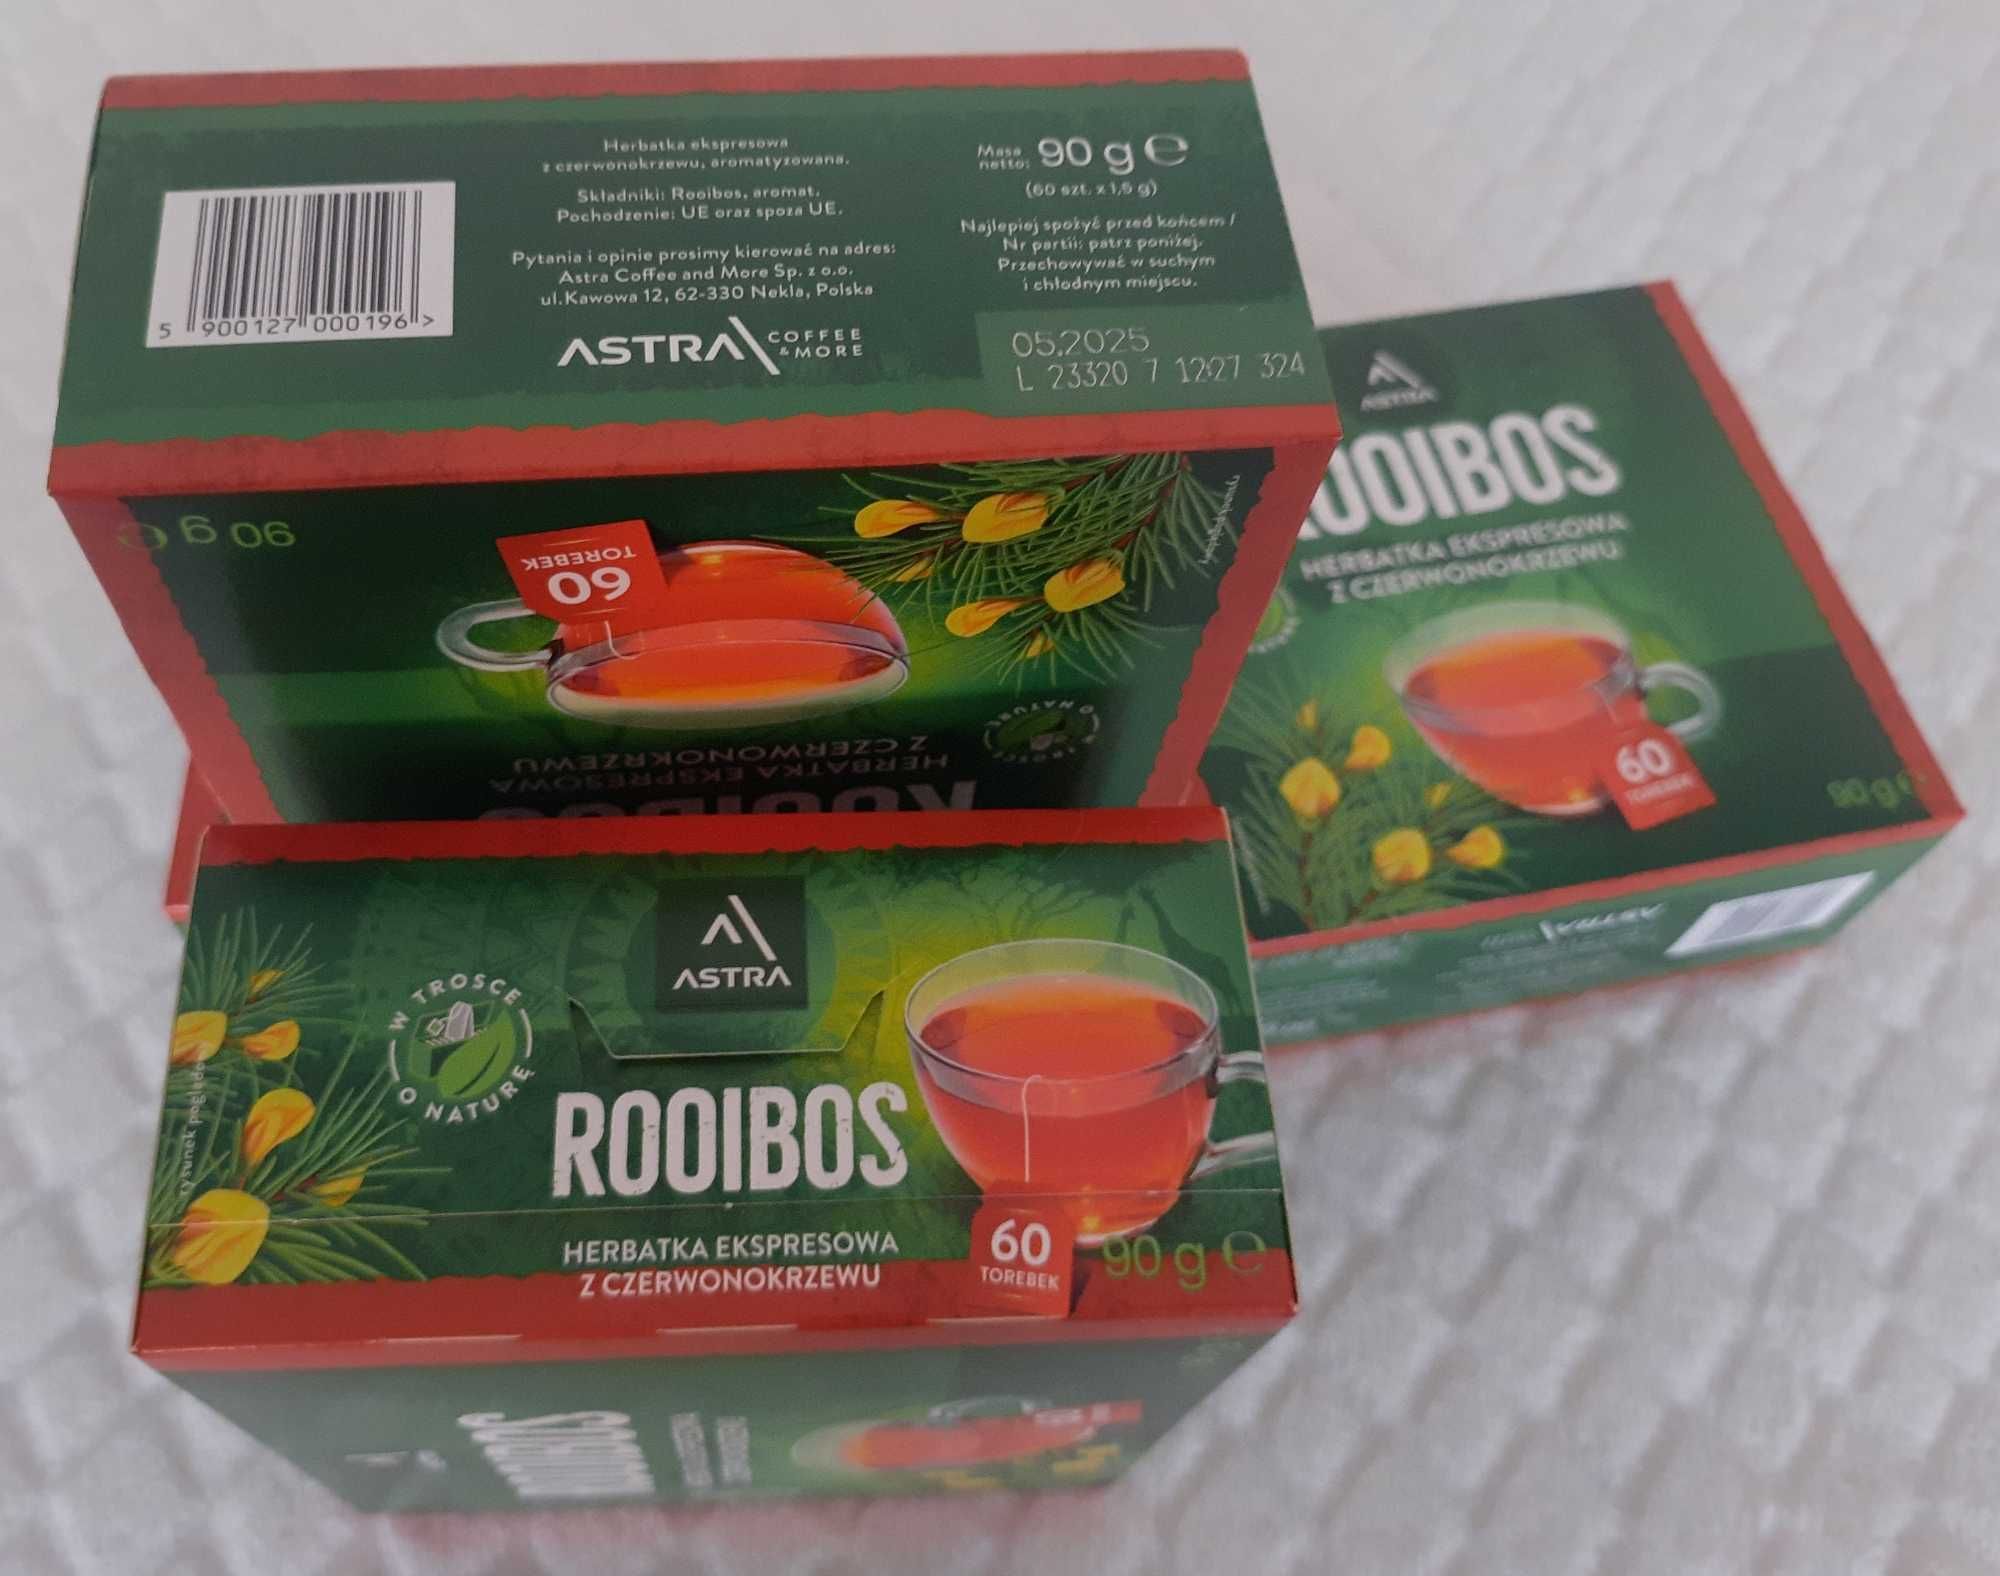 Herbata ekspresowa z czerwonokrzewu, Rooibos, Astra, 60 torebek